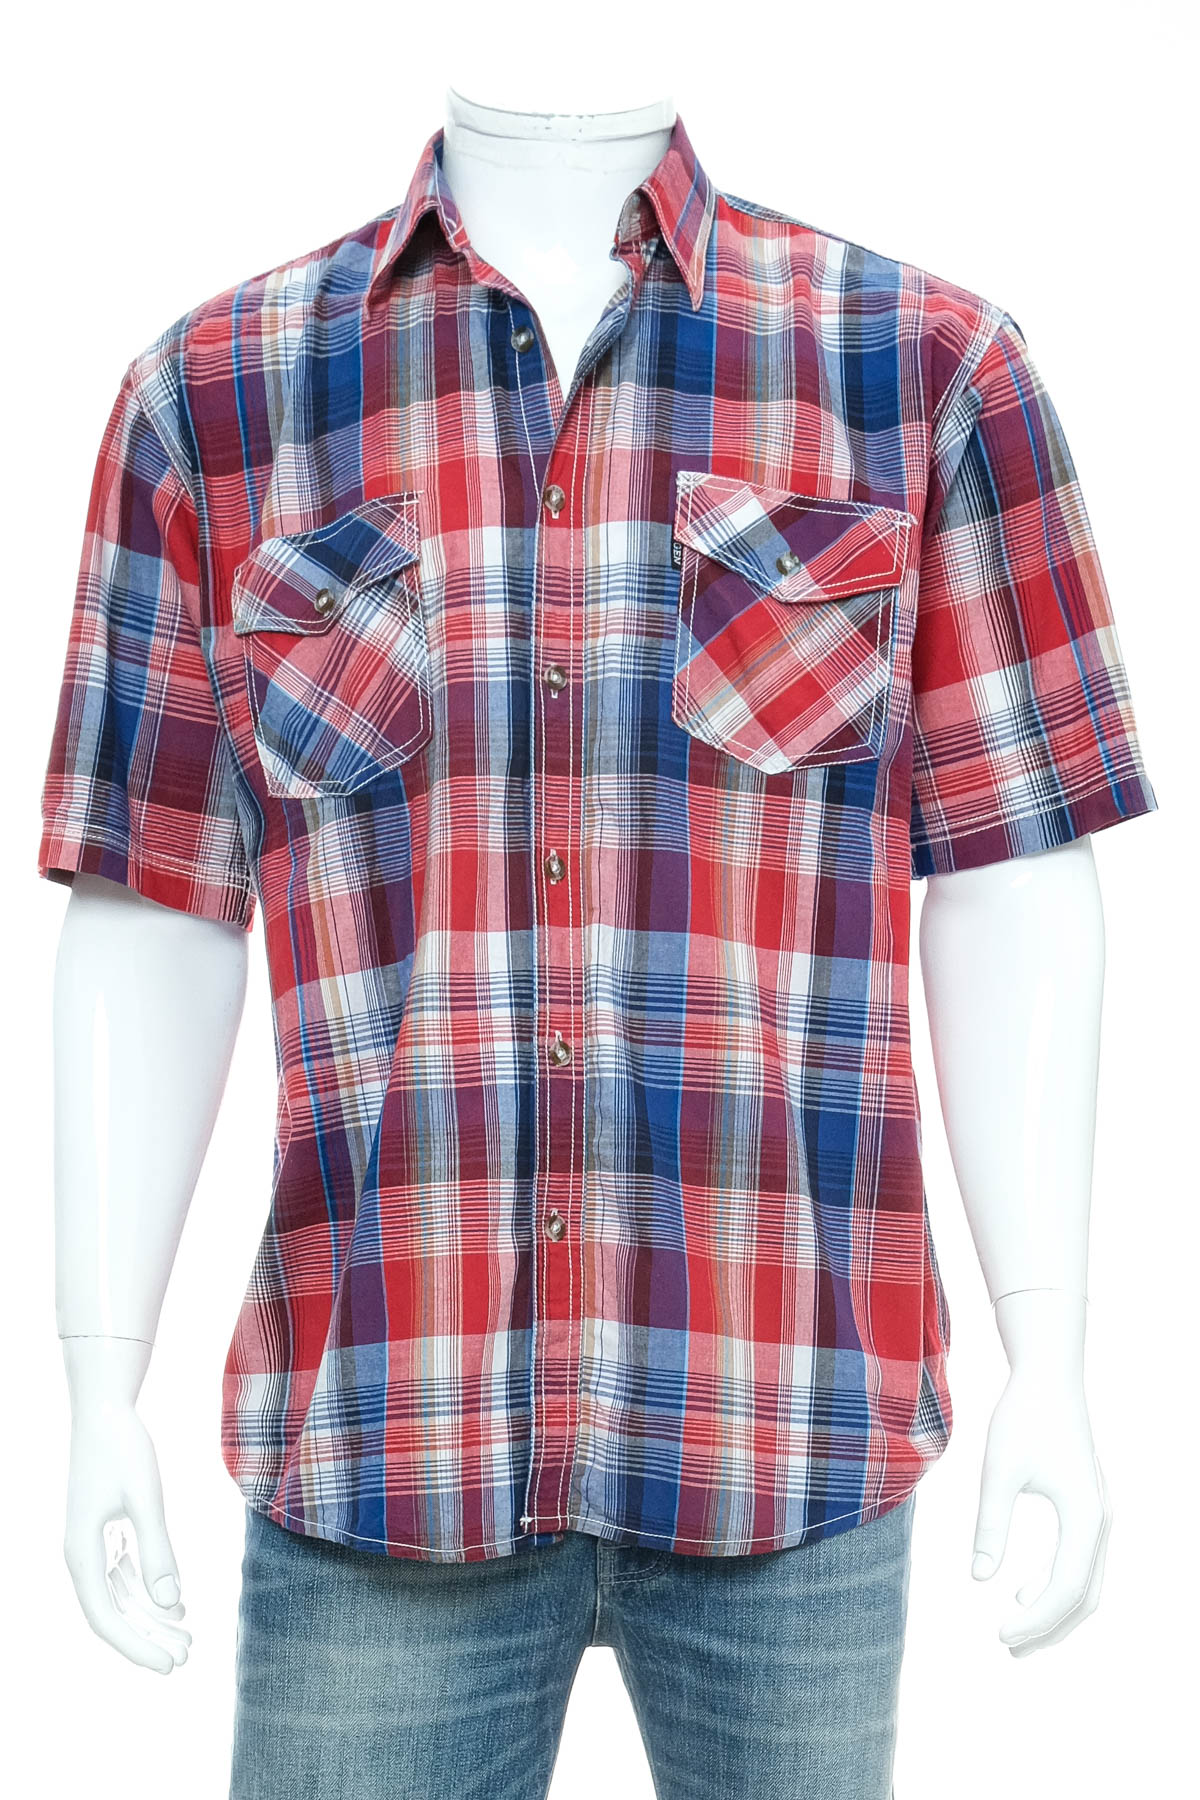 Men's shirt - Bygen Fashion - 0